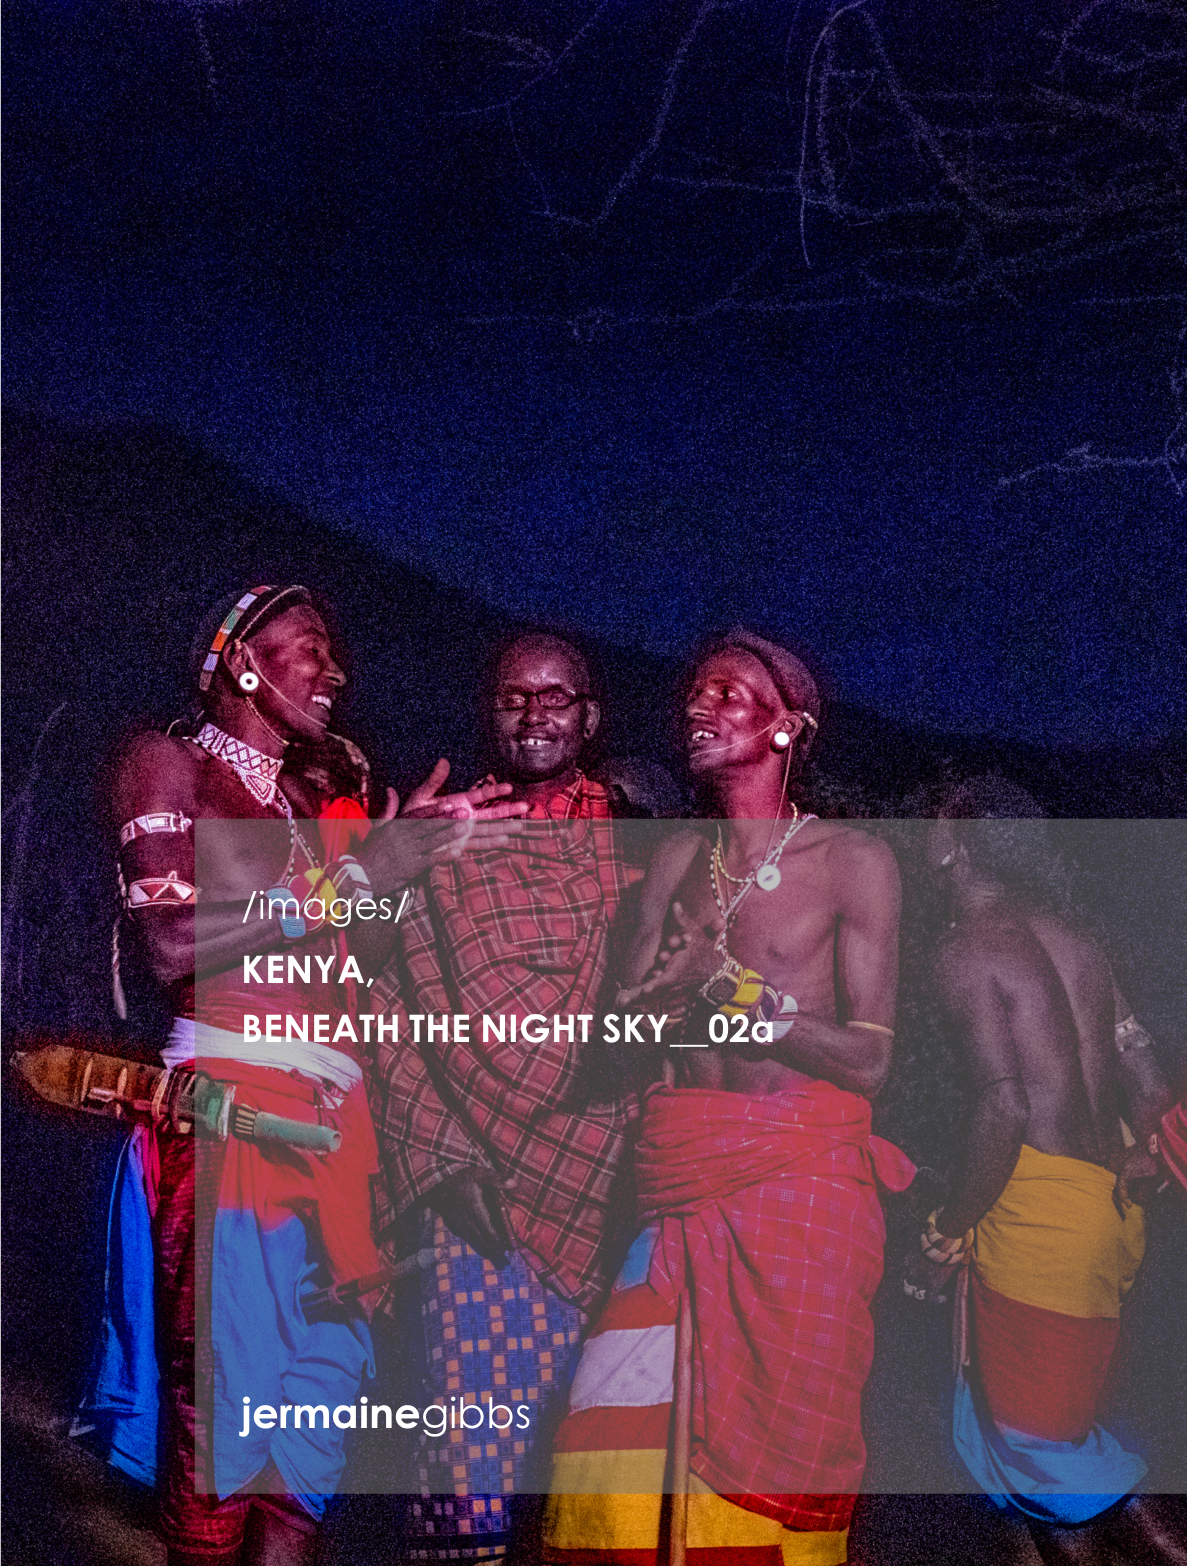 Kenya_Beneath The Night Sky__02a